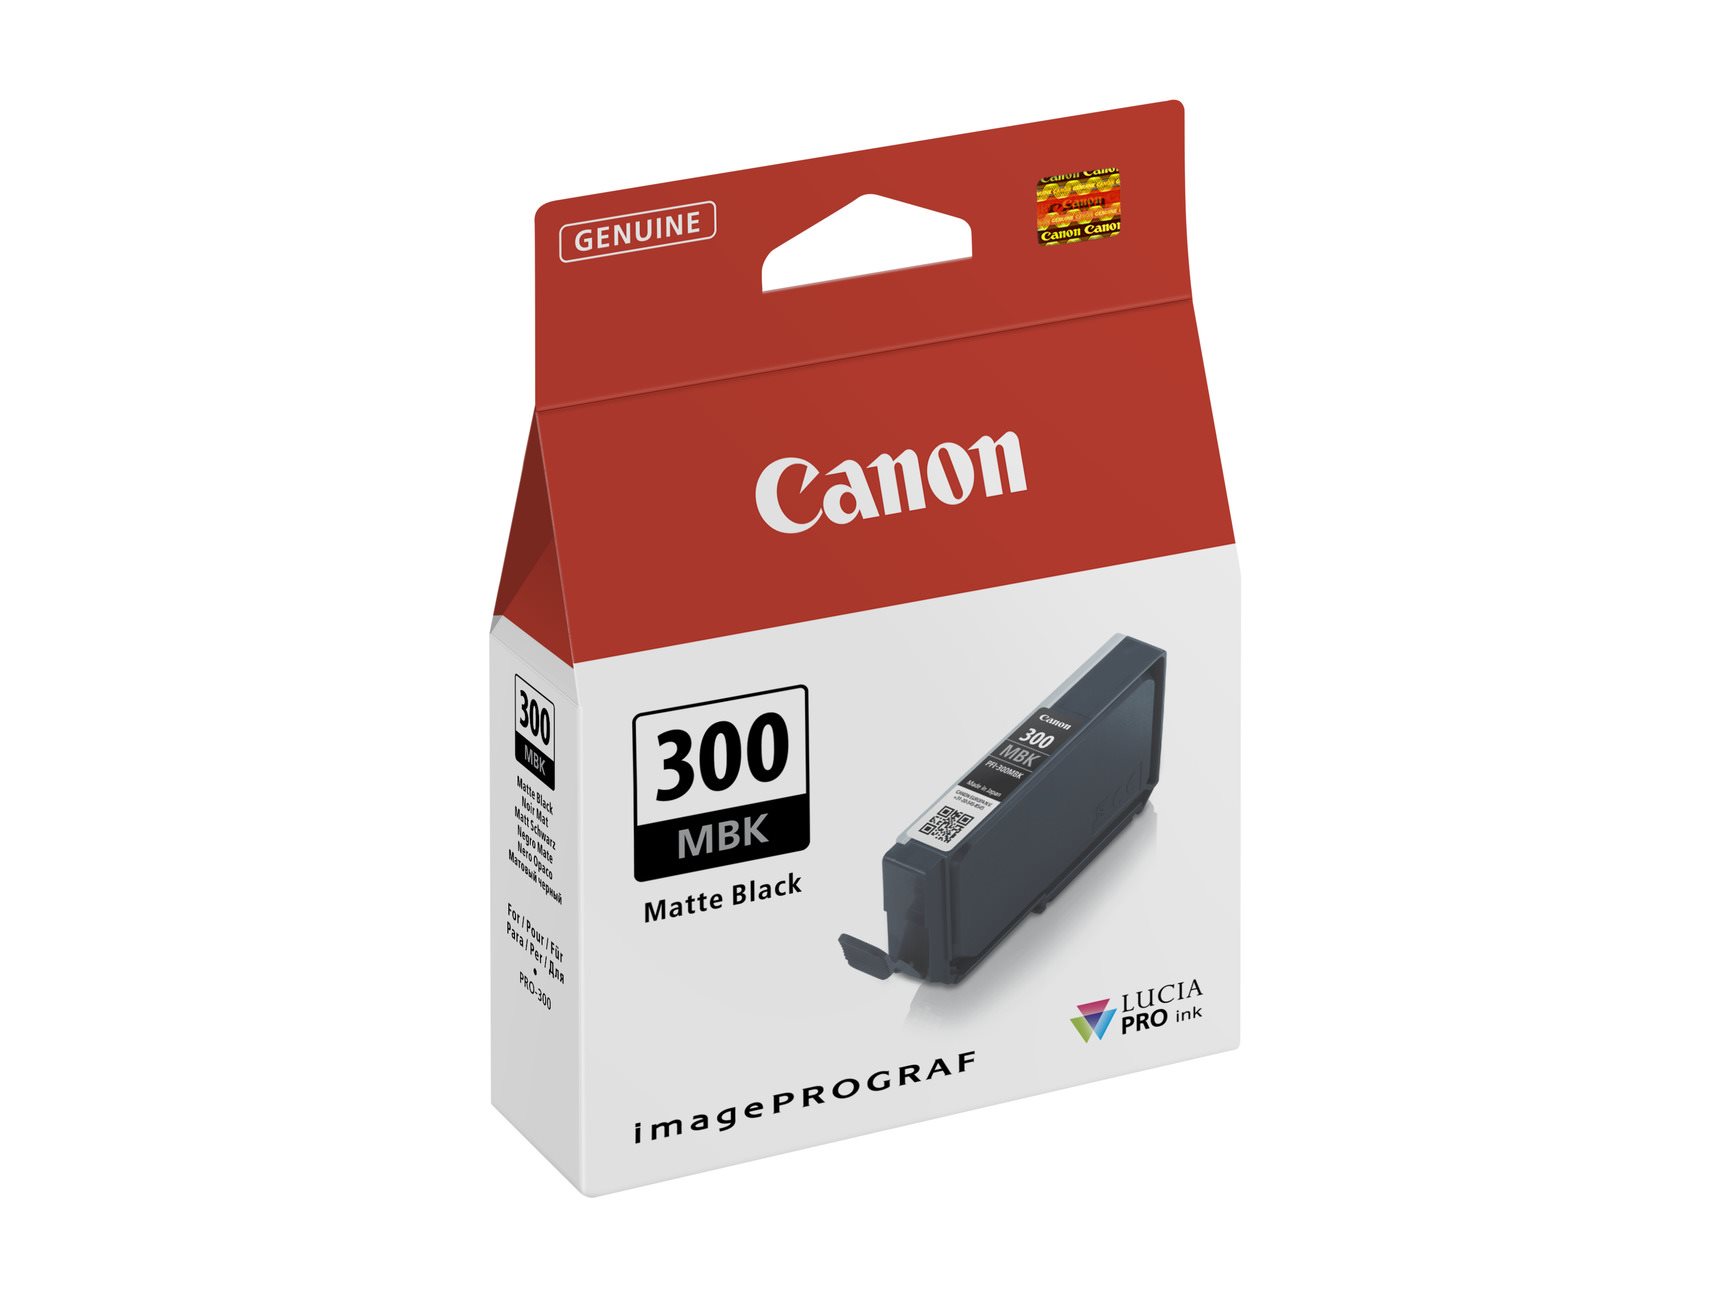 Canon BJ CARTRIDGE PFI-300 MBK EUR/ OCN0 